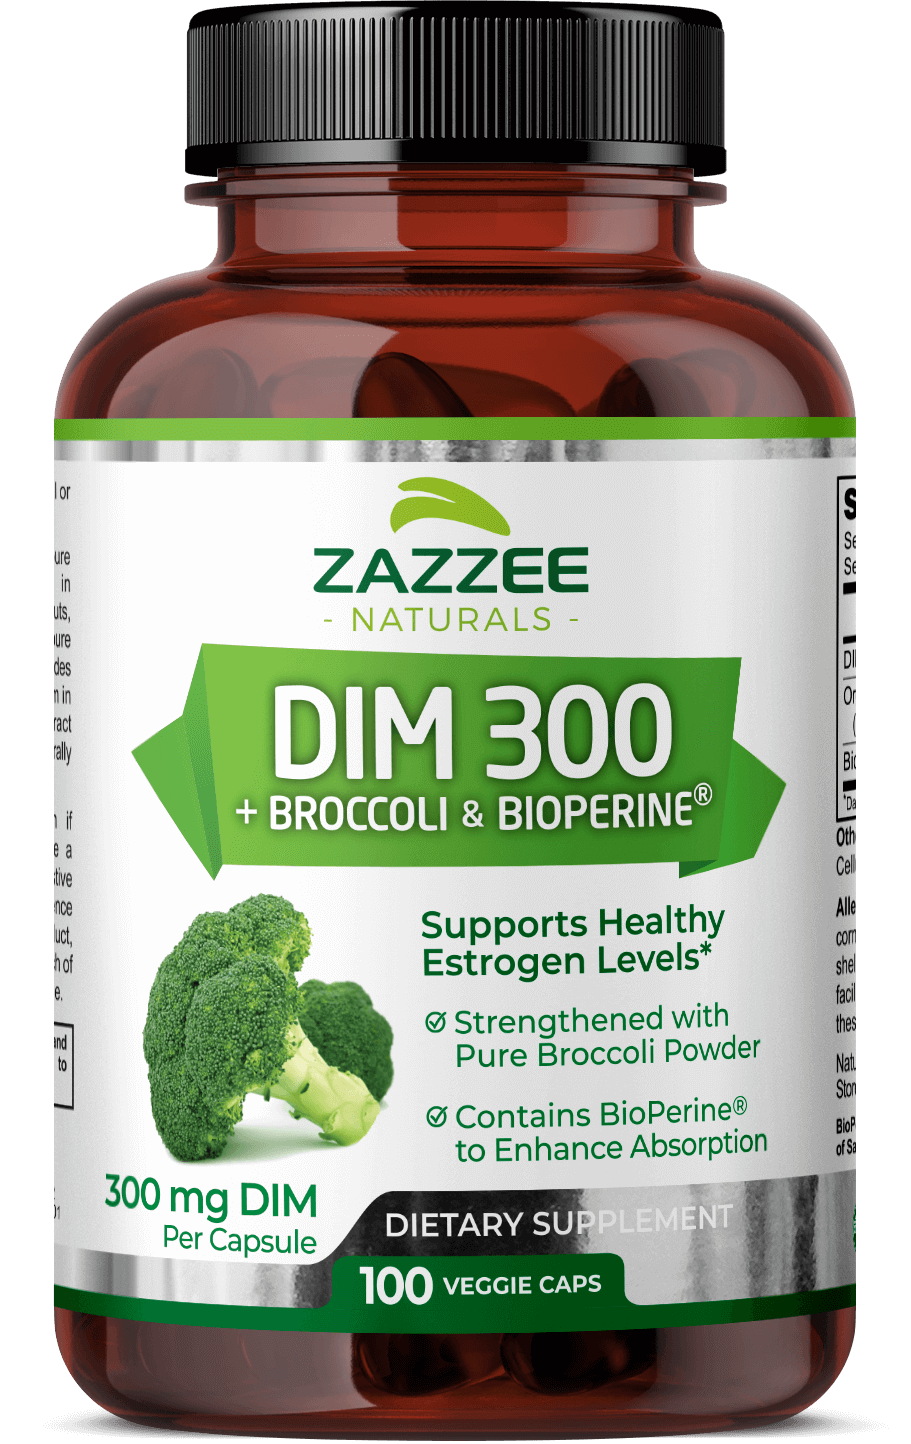 DIM 300 Plus BioPerine